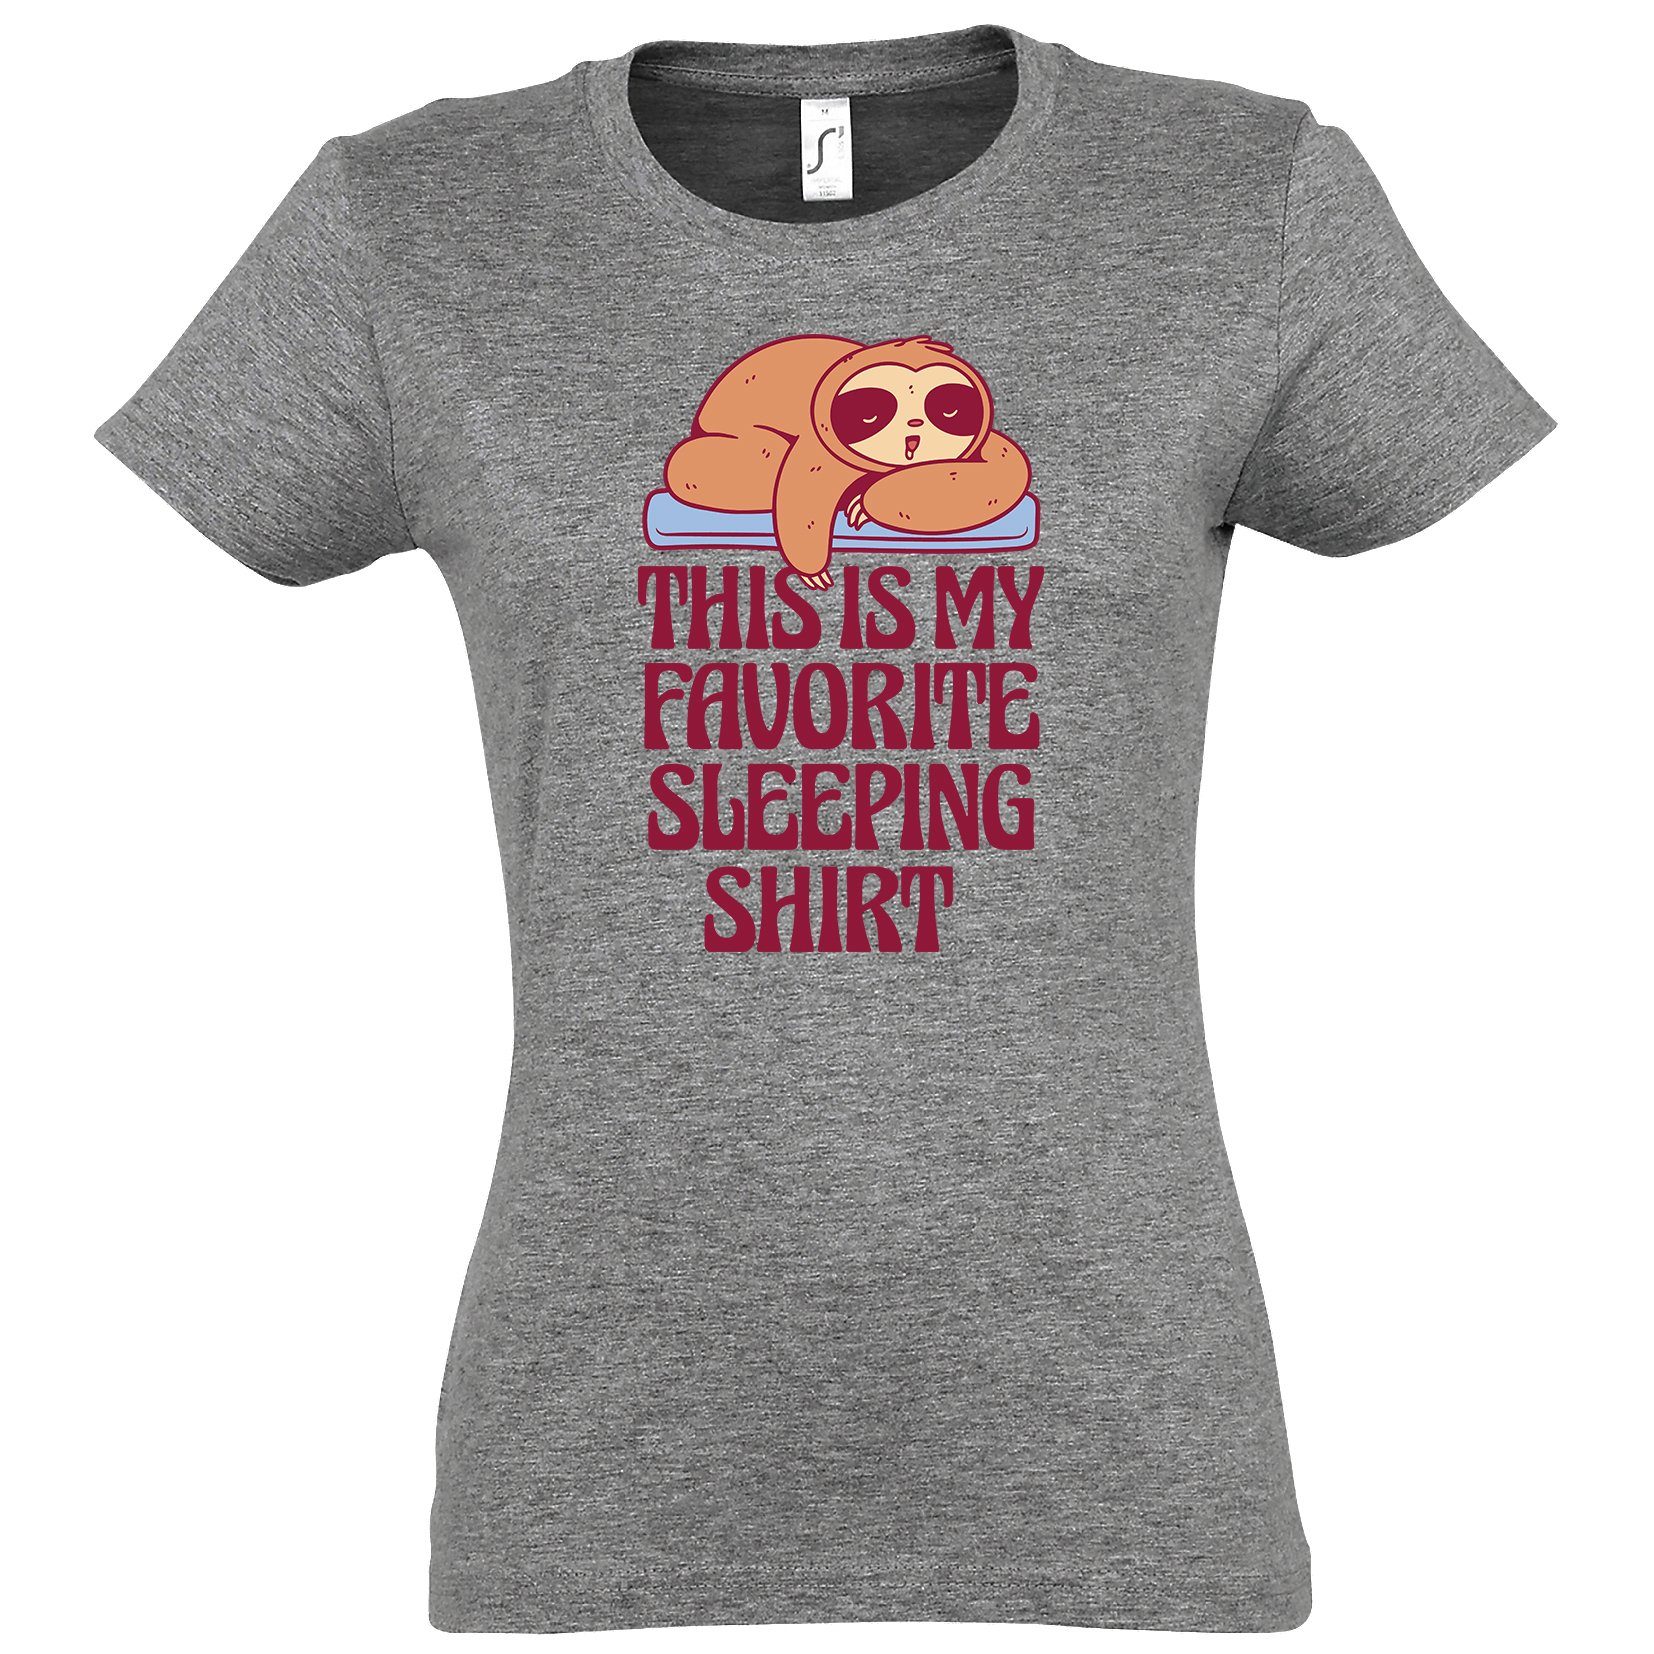 mit T-Shirt My Designz Youth süßem Damen Grau Sleeping Frontprint Favorite Shirt